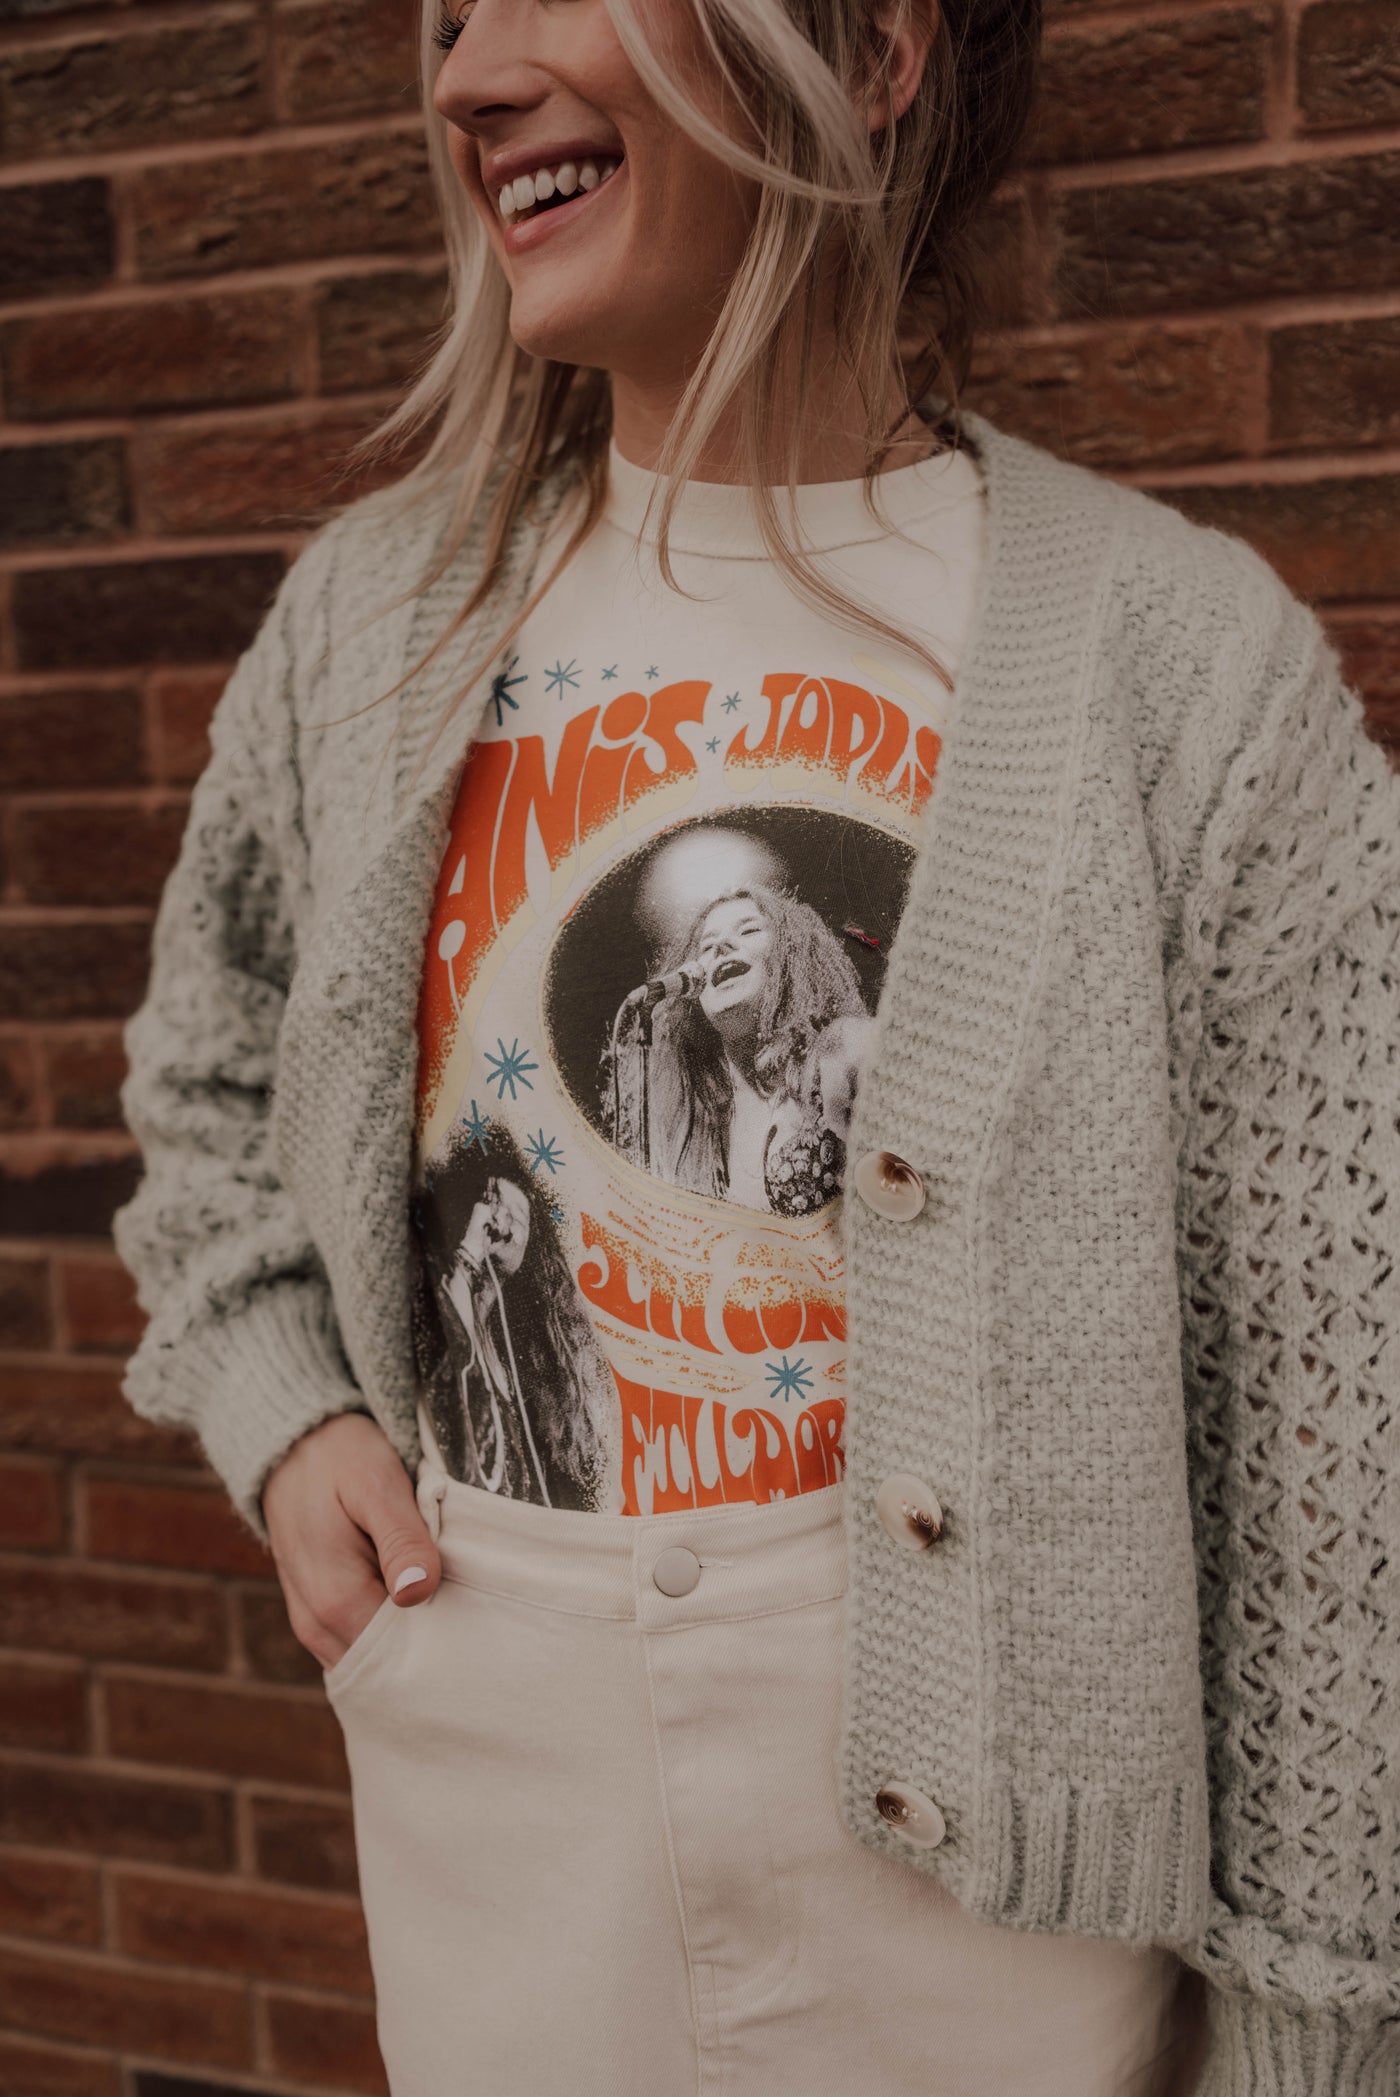 Janice Joplin In Concert Reverse Tour Tee - Stone Vintage